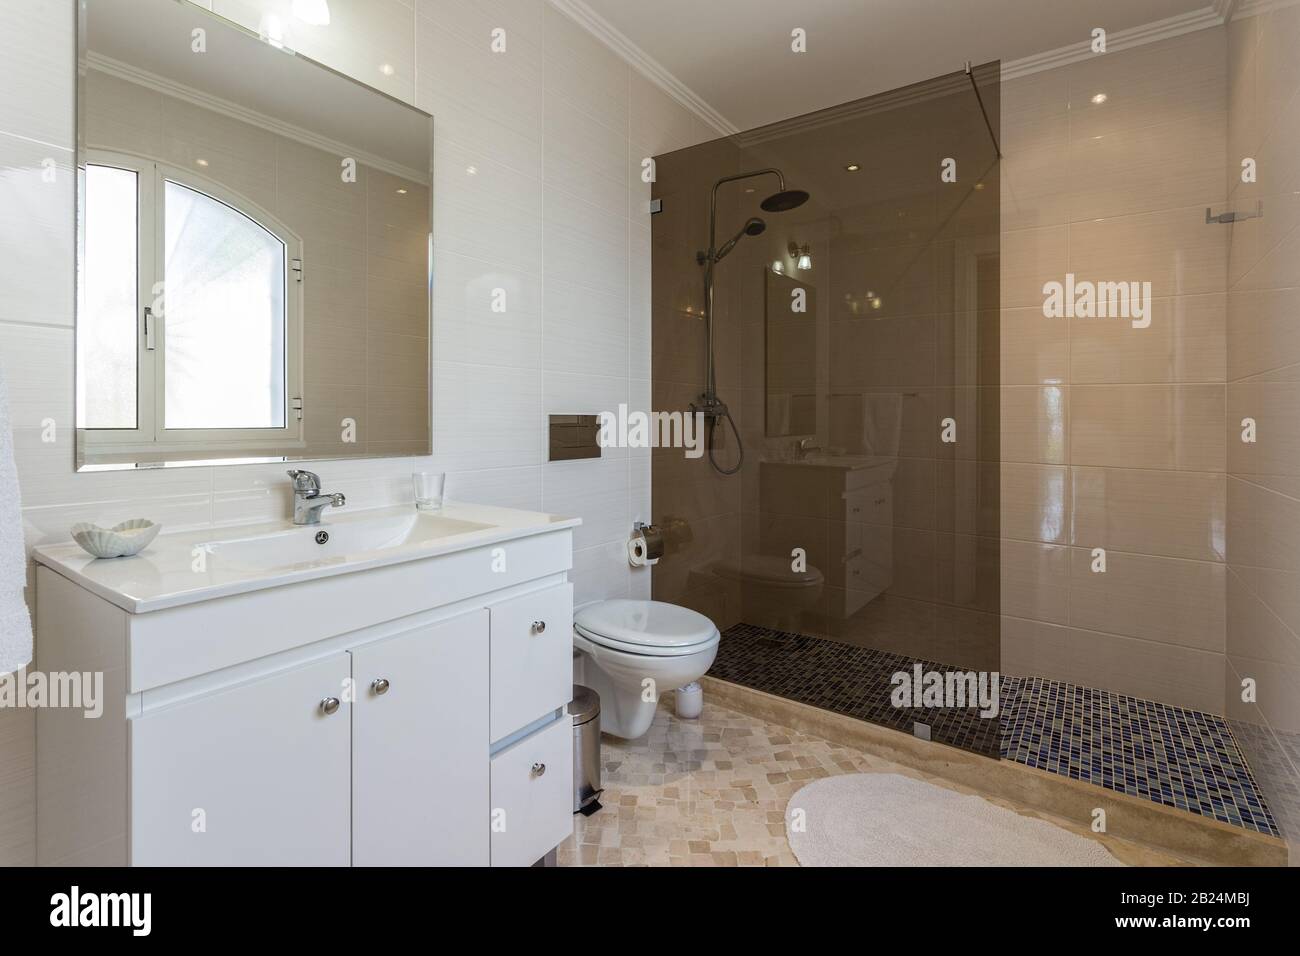 Stylish Bath Shower Rooms In Contemporary Decor Stock Photo Alamy